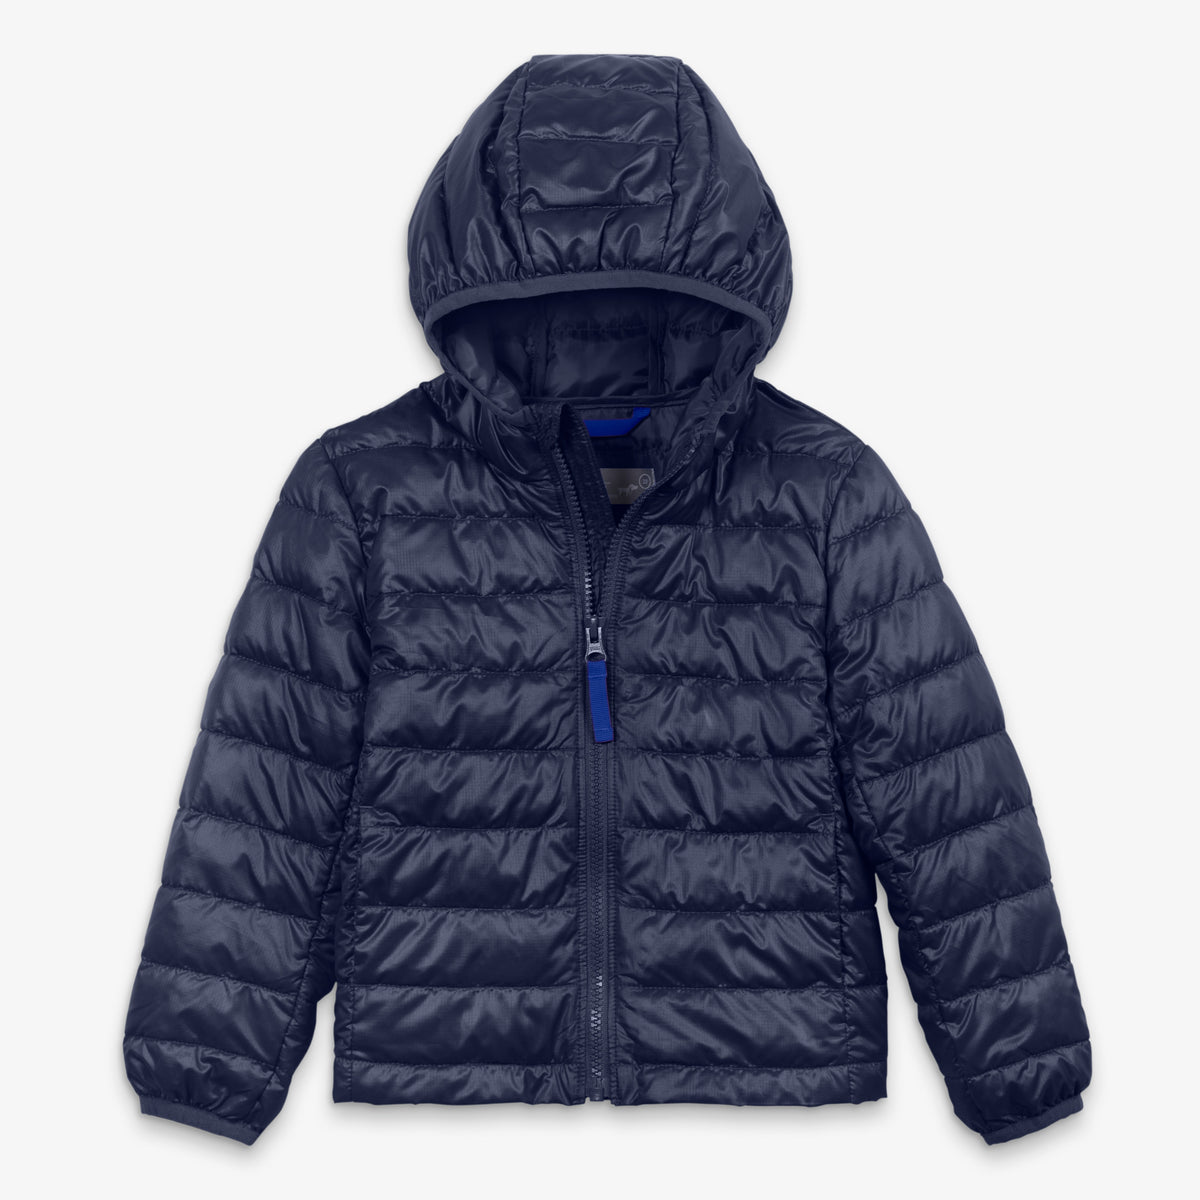 Kids lightweight puffer jacket | Primary.com